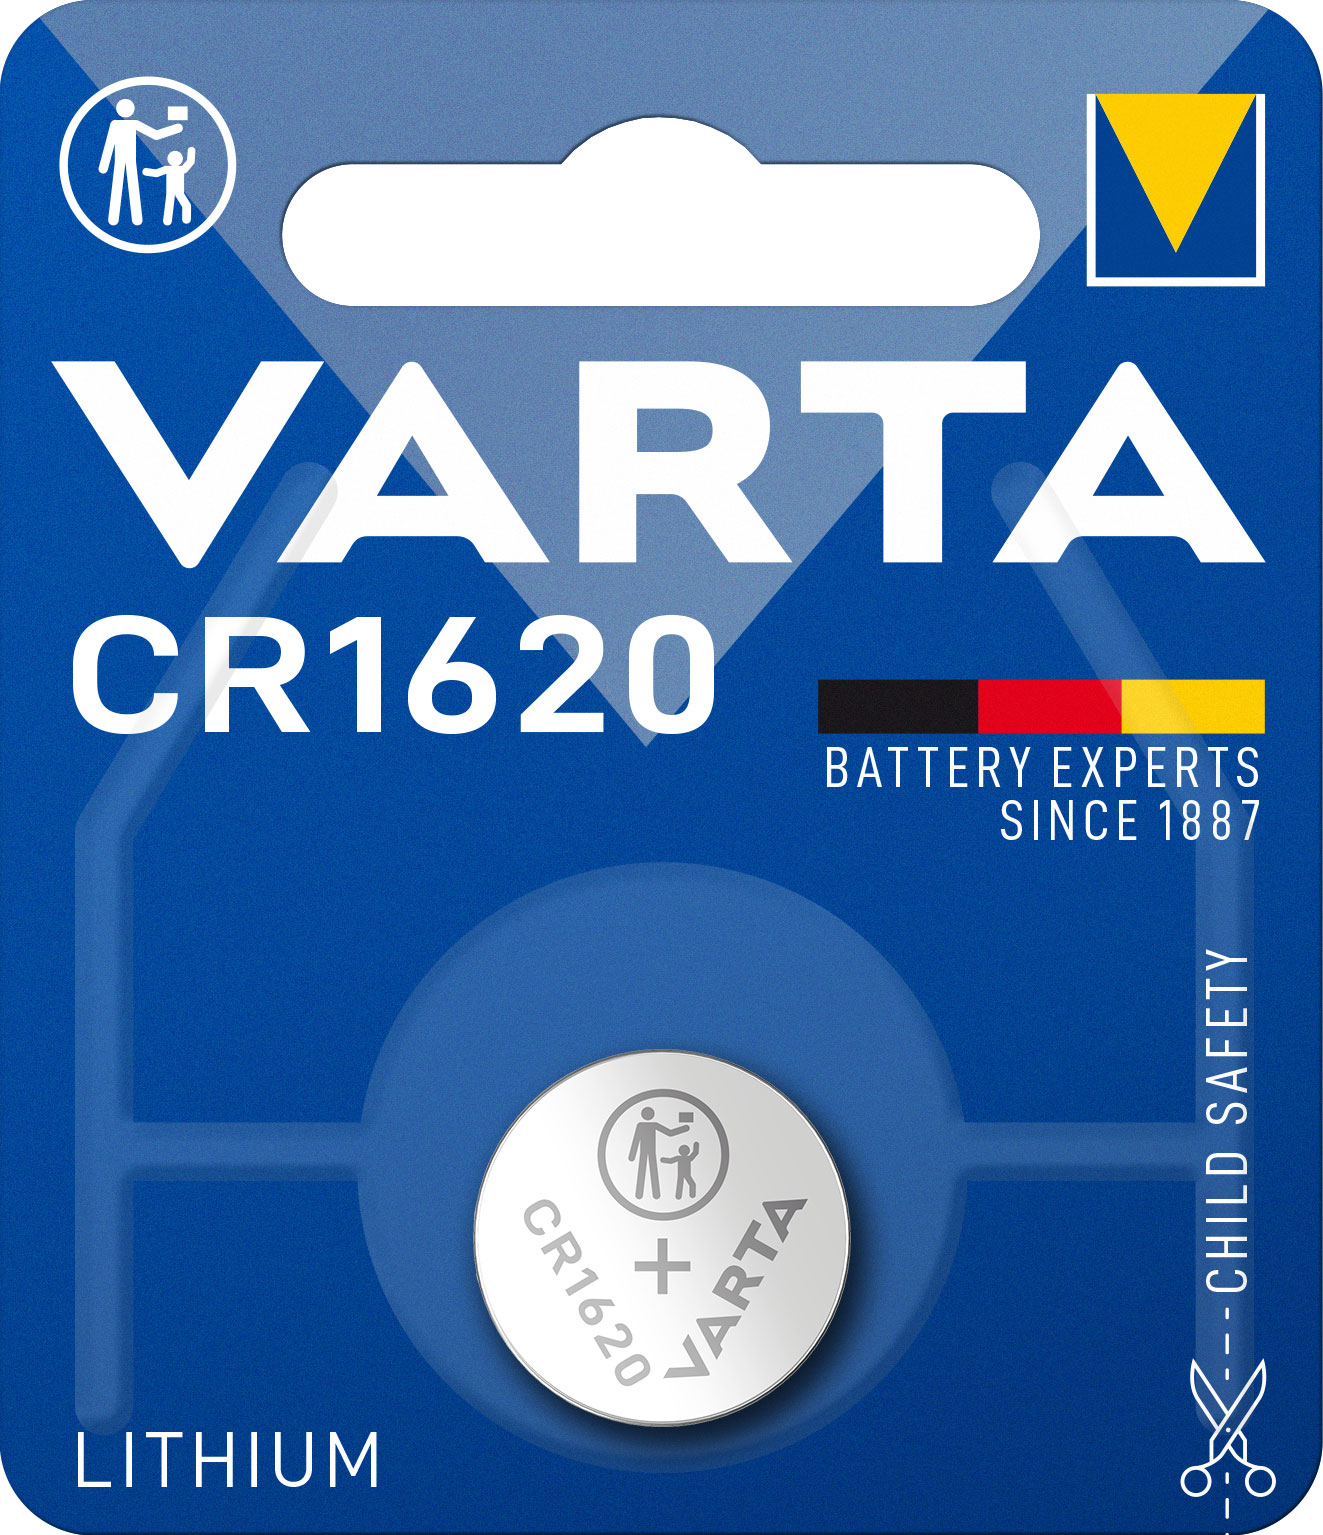 VARTA CR 1620 ELECTRONICS